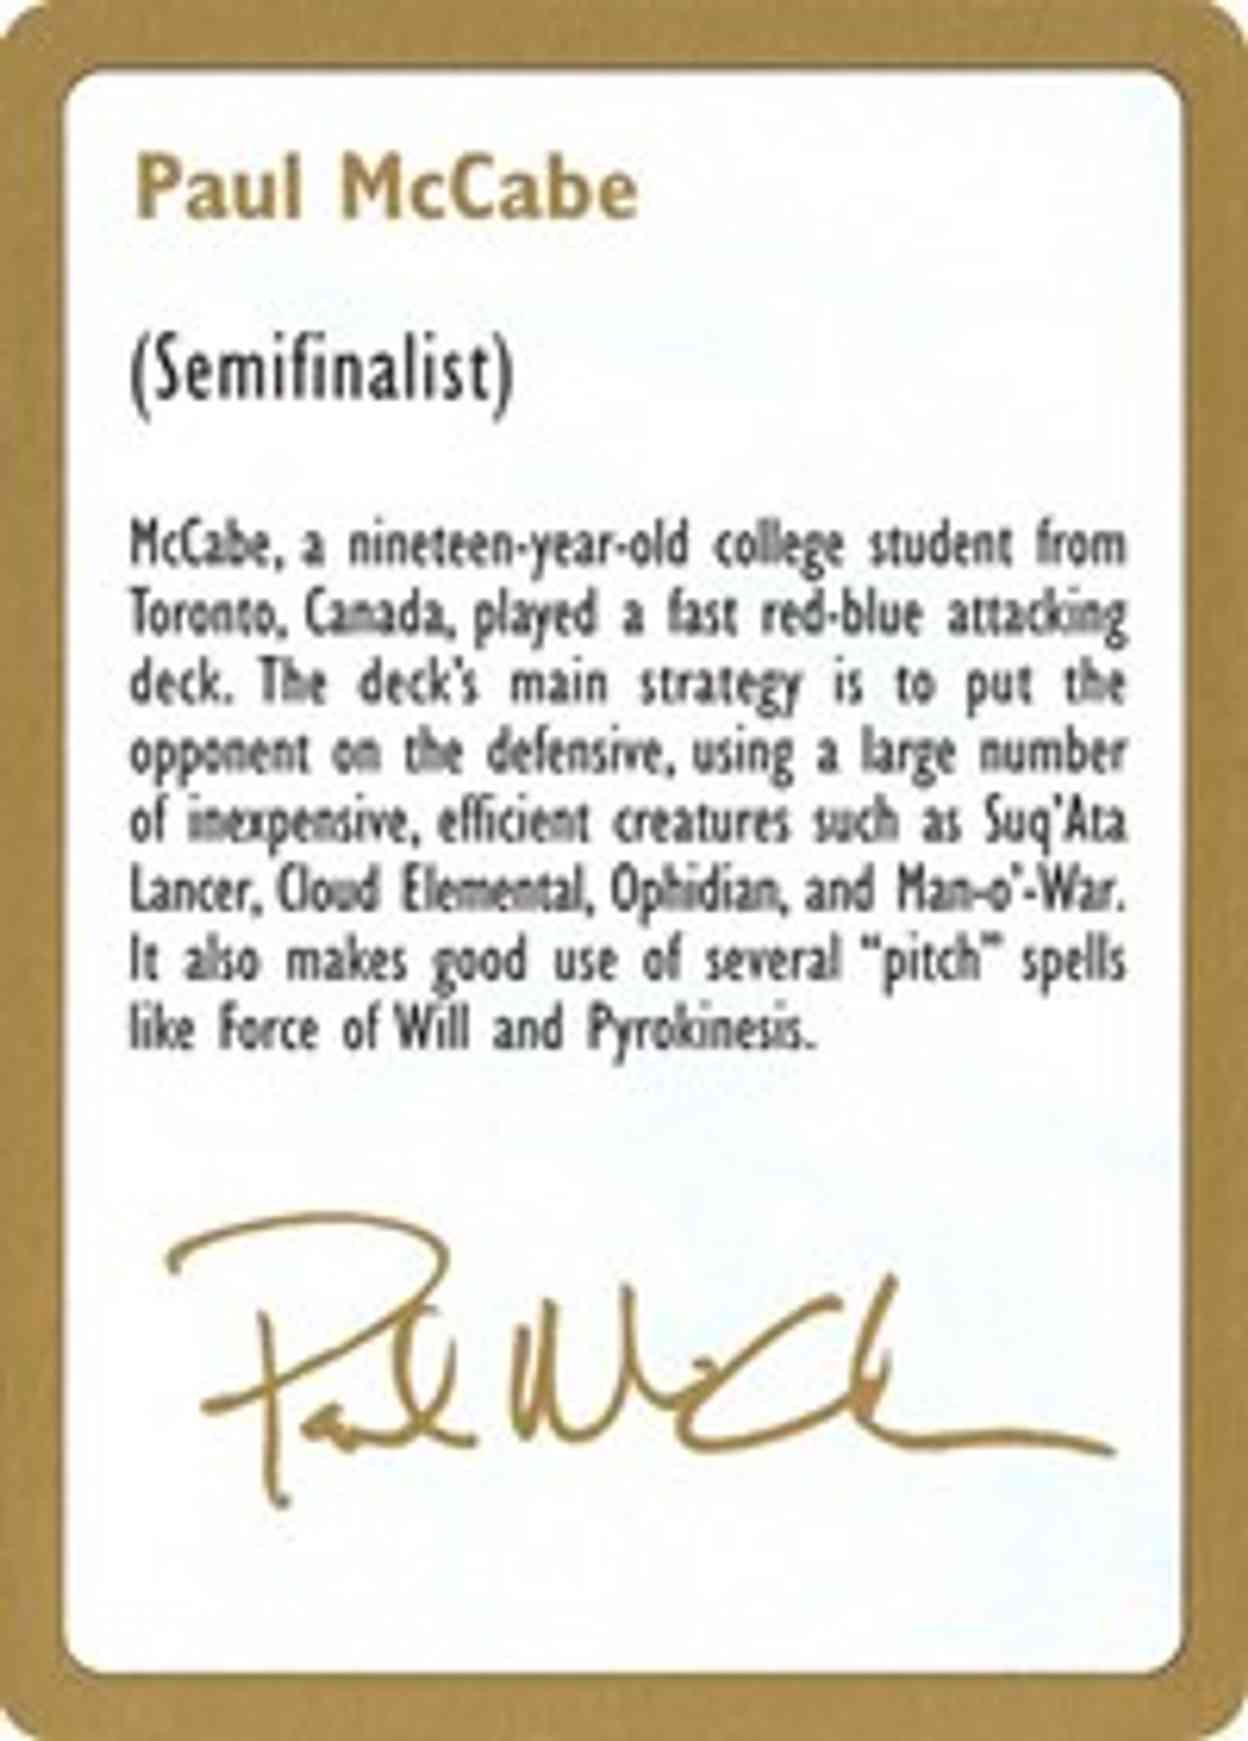 1997 Paul McCabe Biography Card magic card front